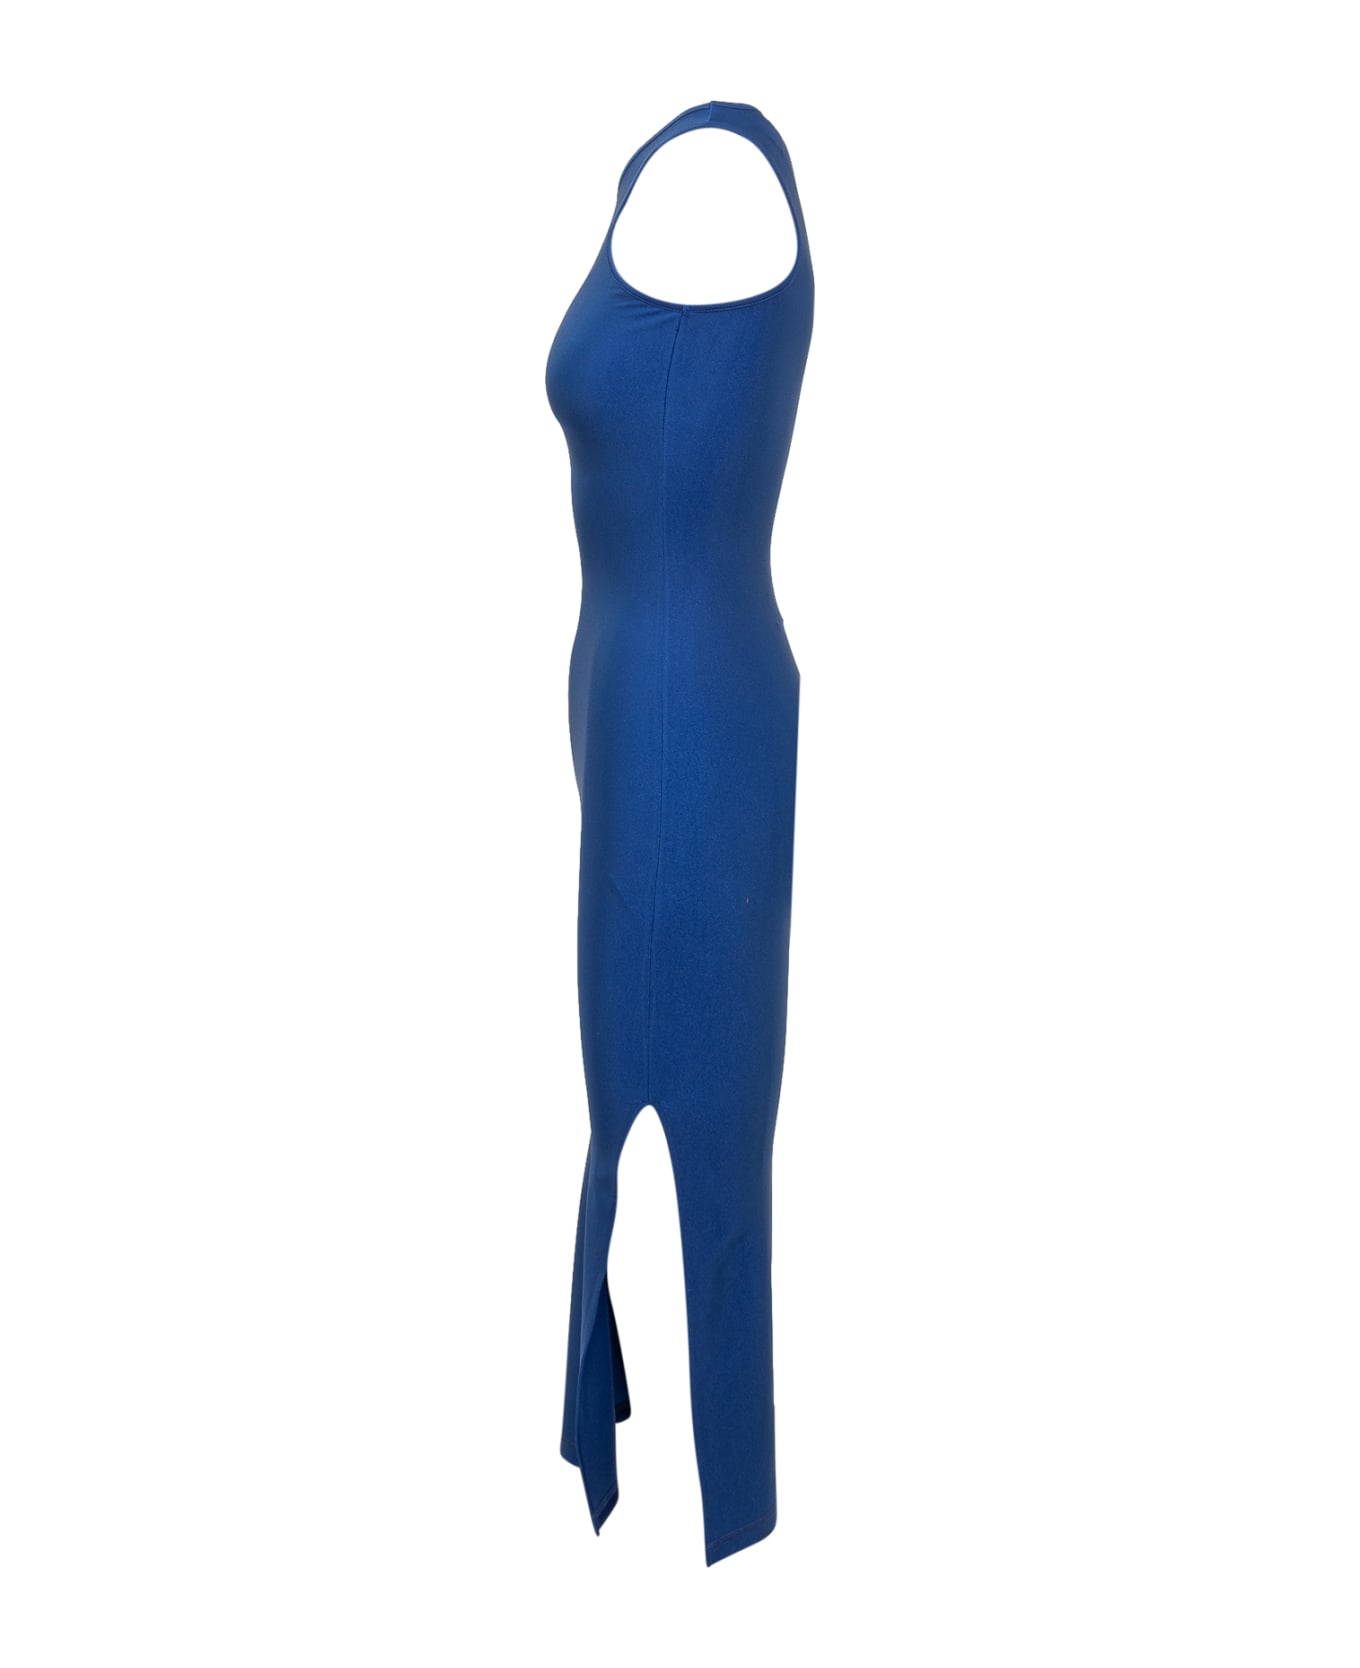 Coperni Tank Top Dress Dress - BLUE